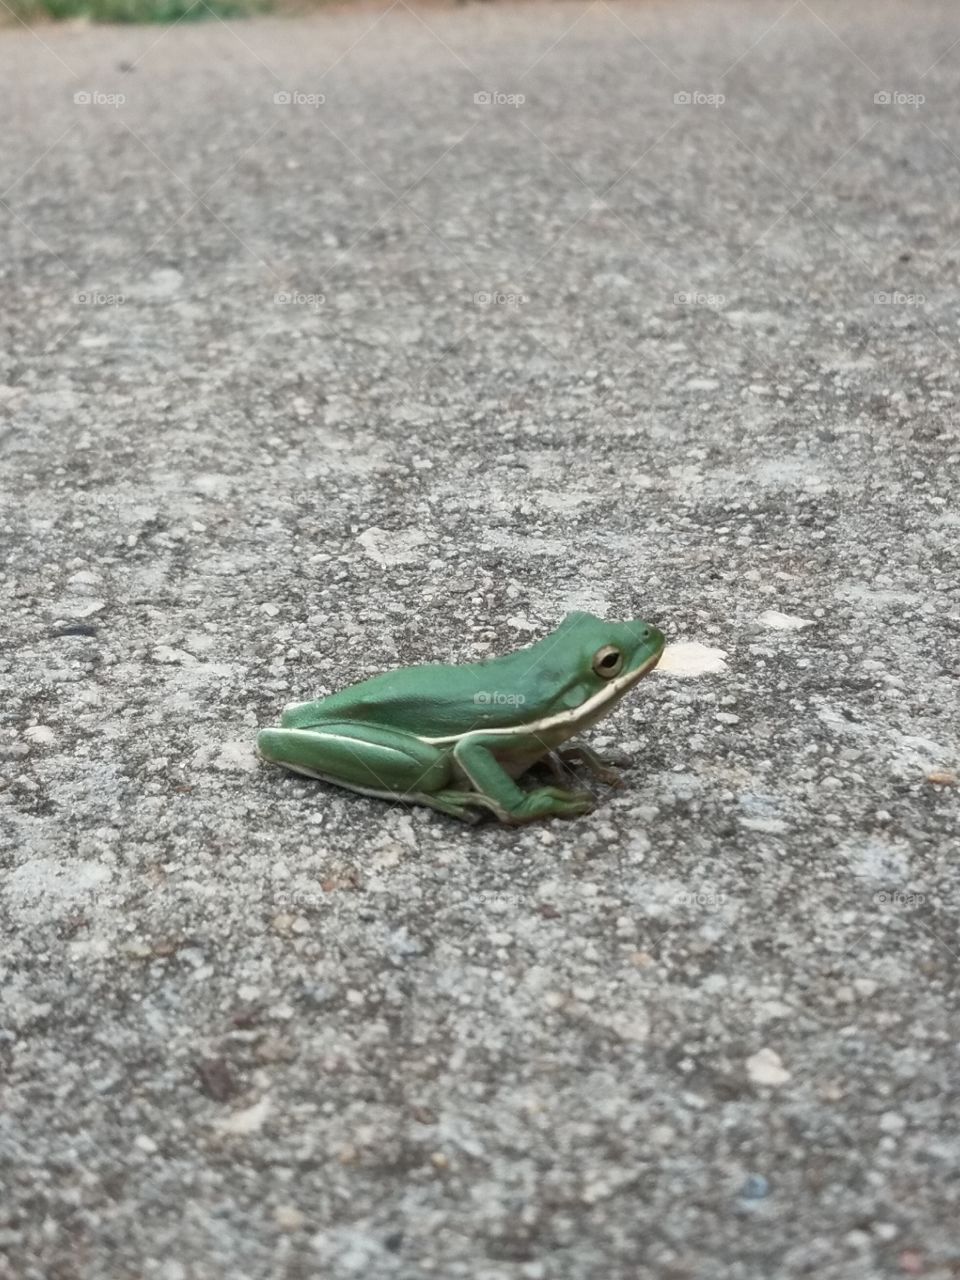 Green Tree Frog sitting in paved gray driveway in suburban Georgia